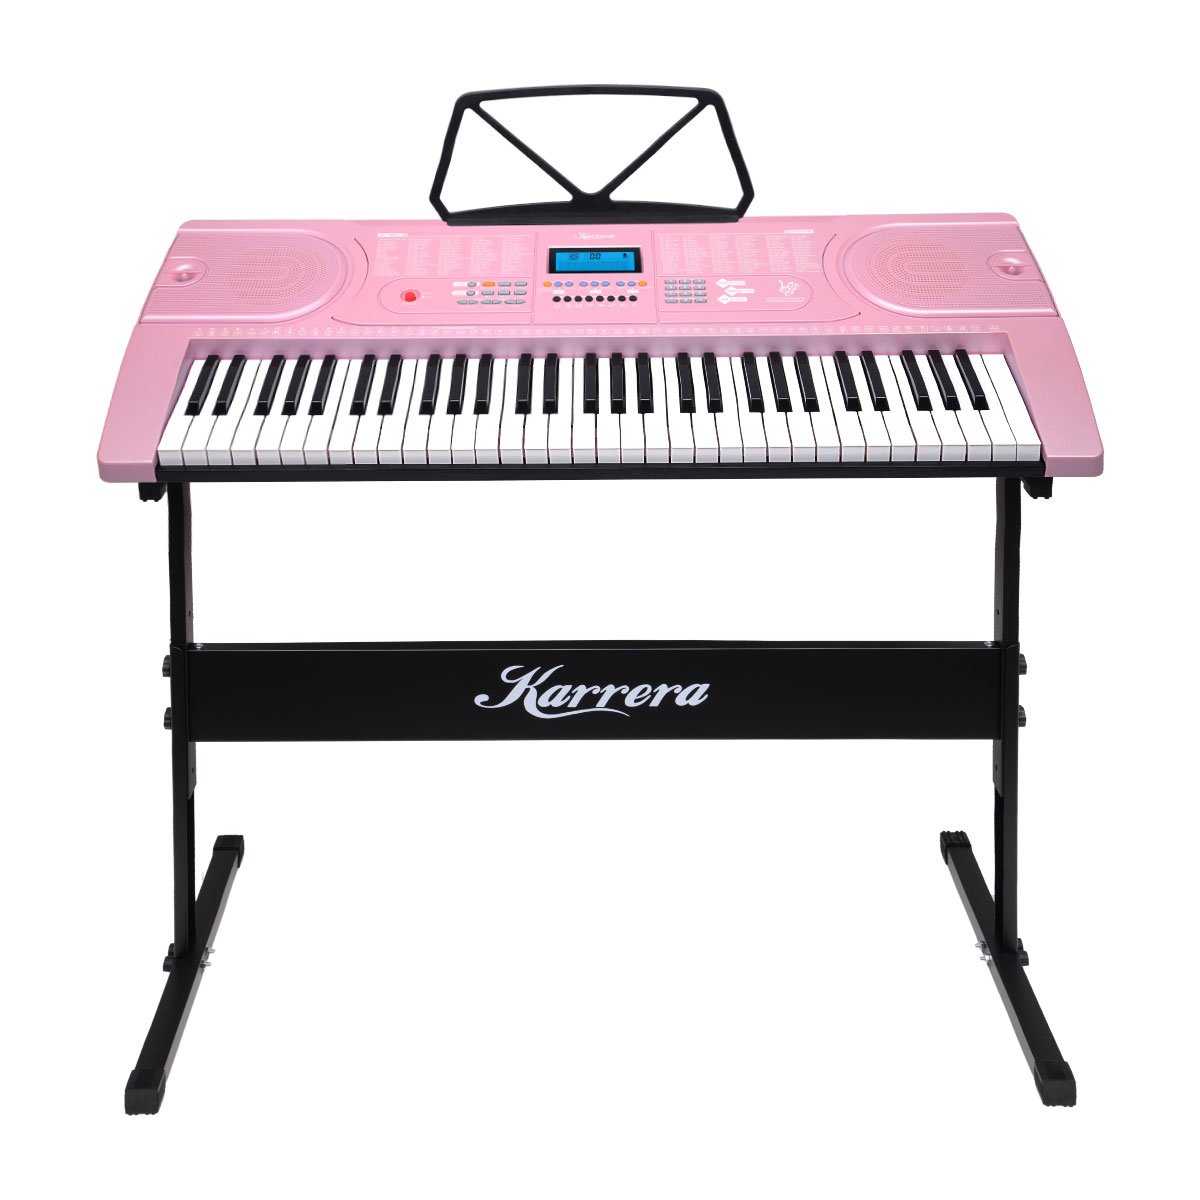 Karrera 61 Keys Electronic Keyboard Piano Music with Stand - Pink 1